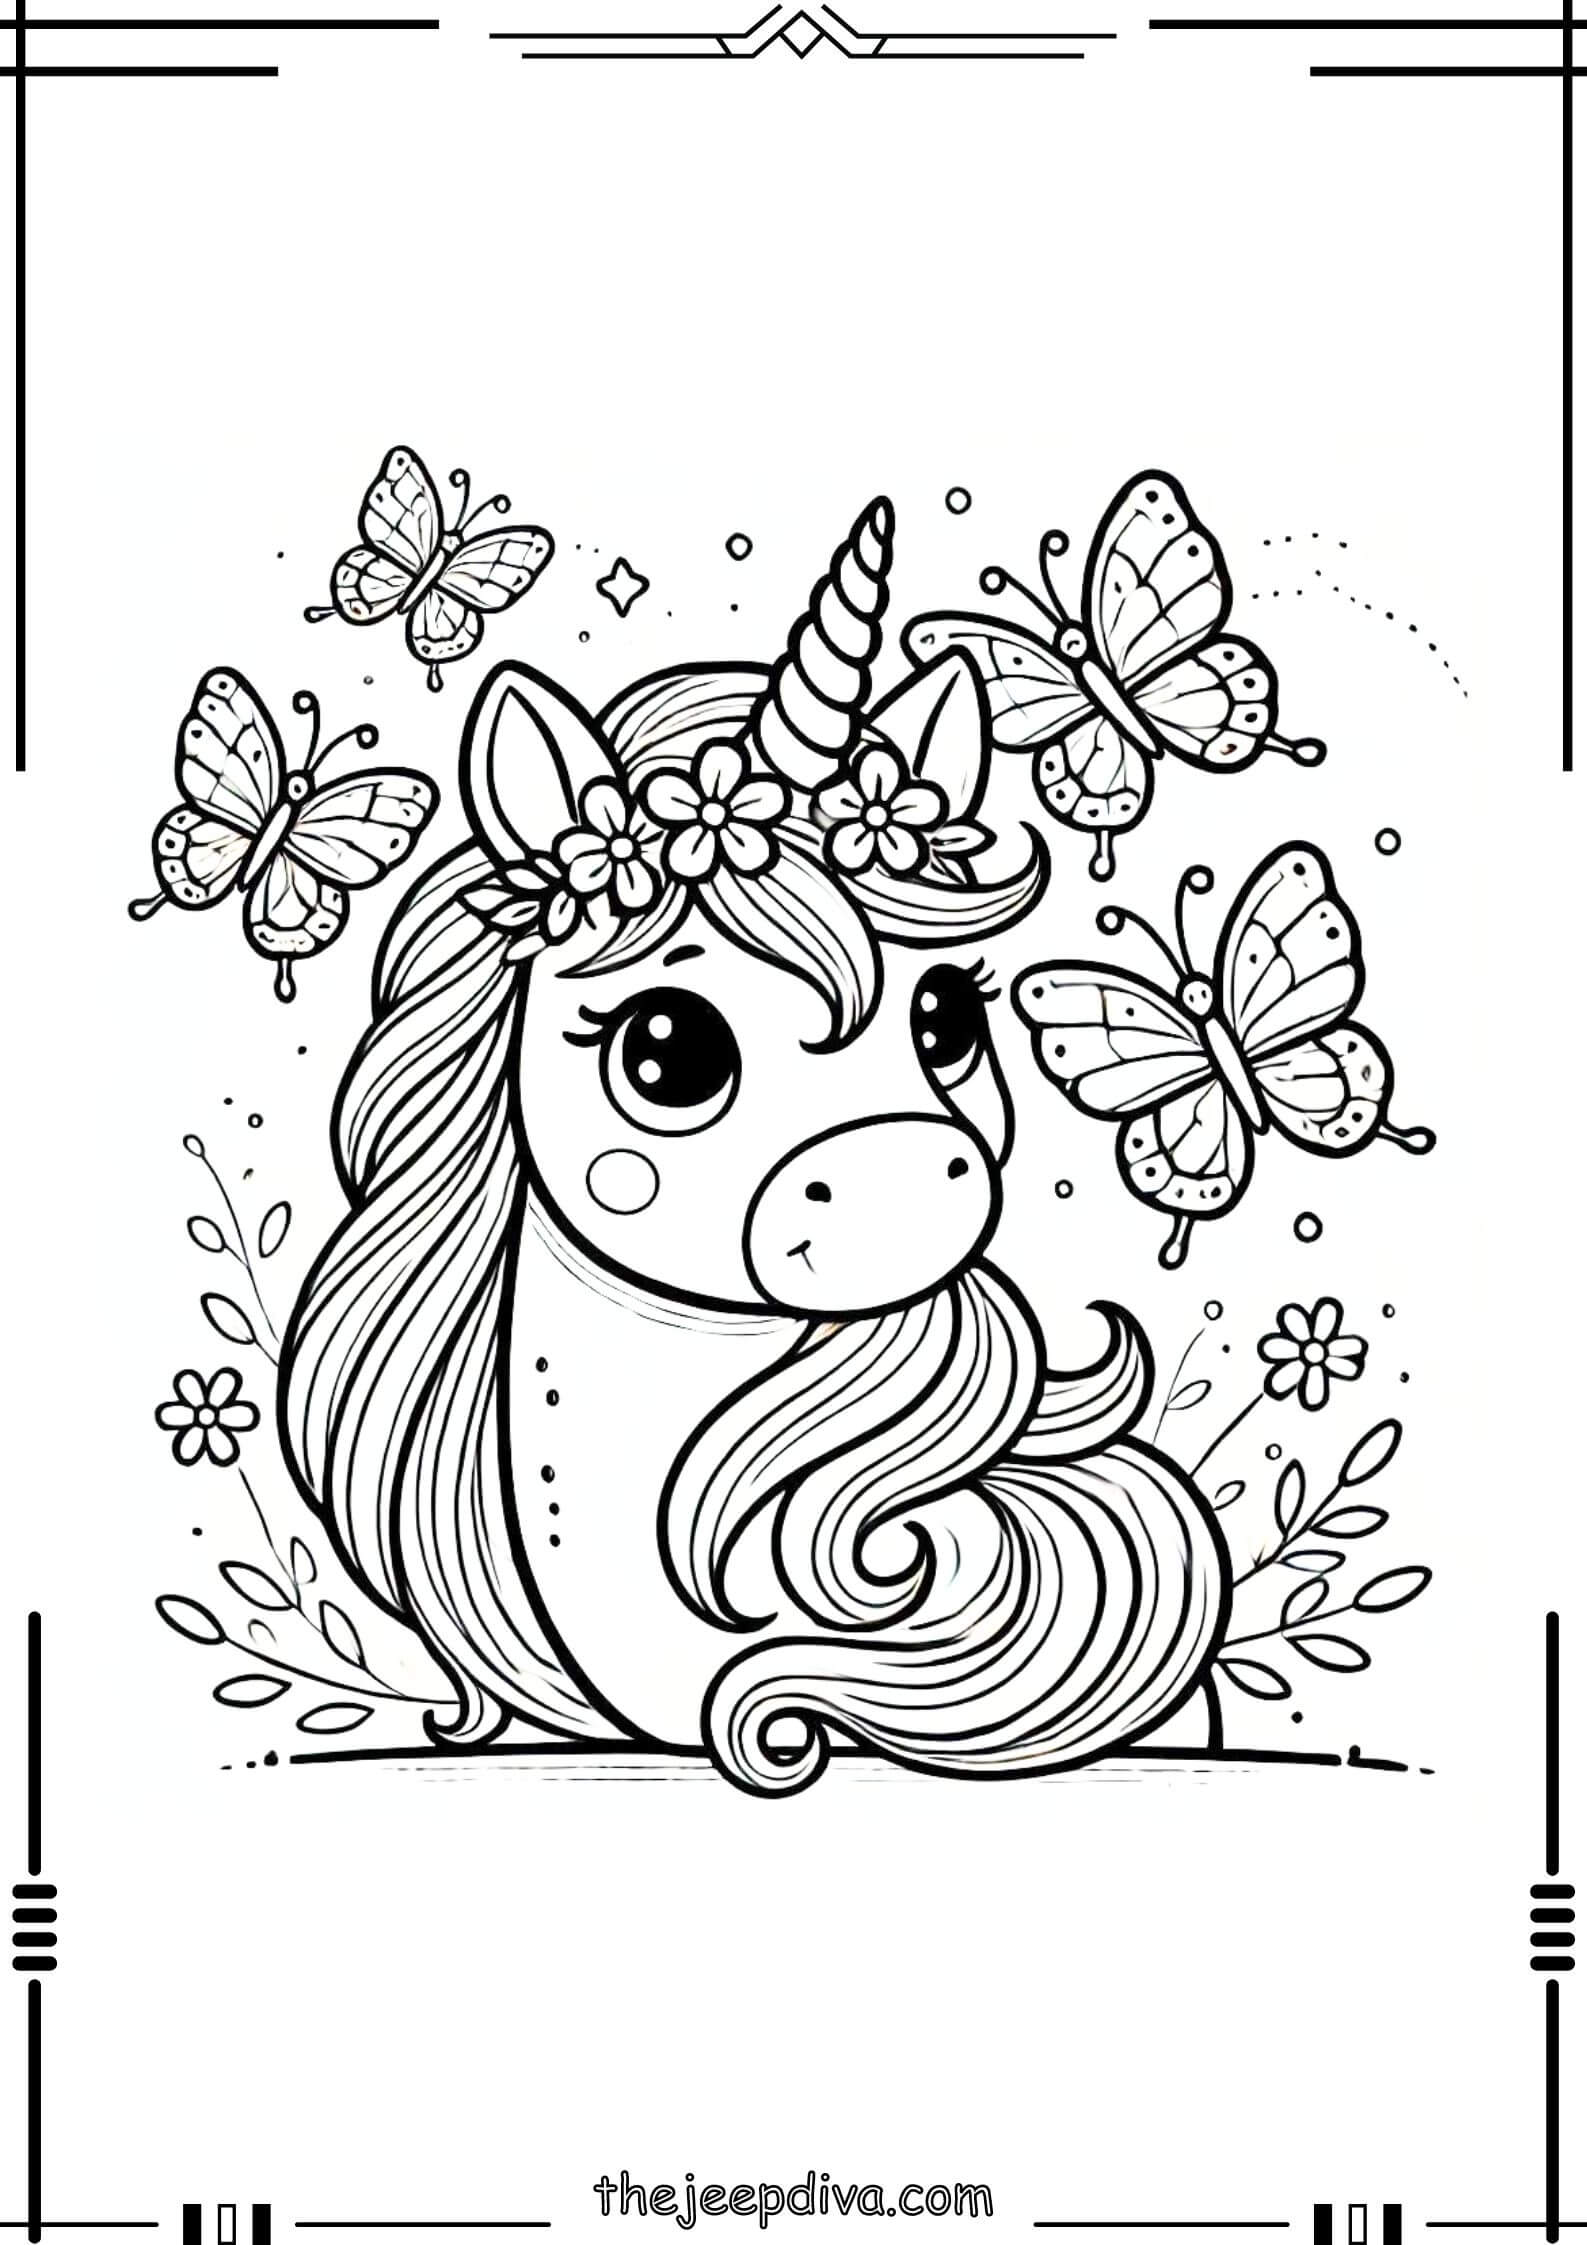 unicorn-coloring-page-medium-21